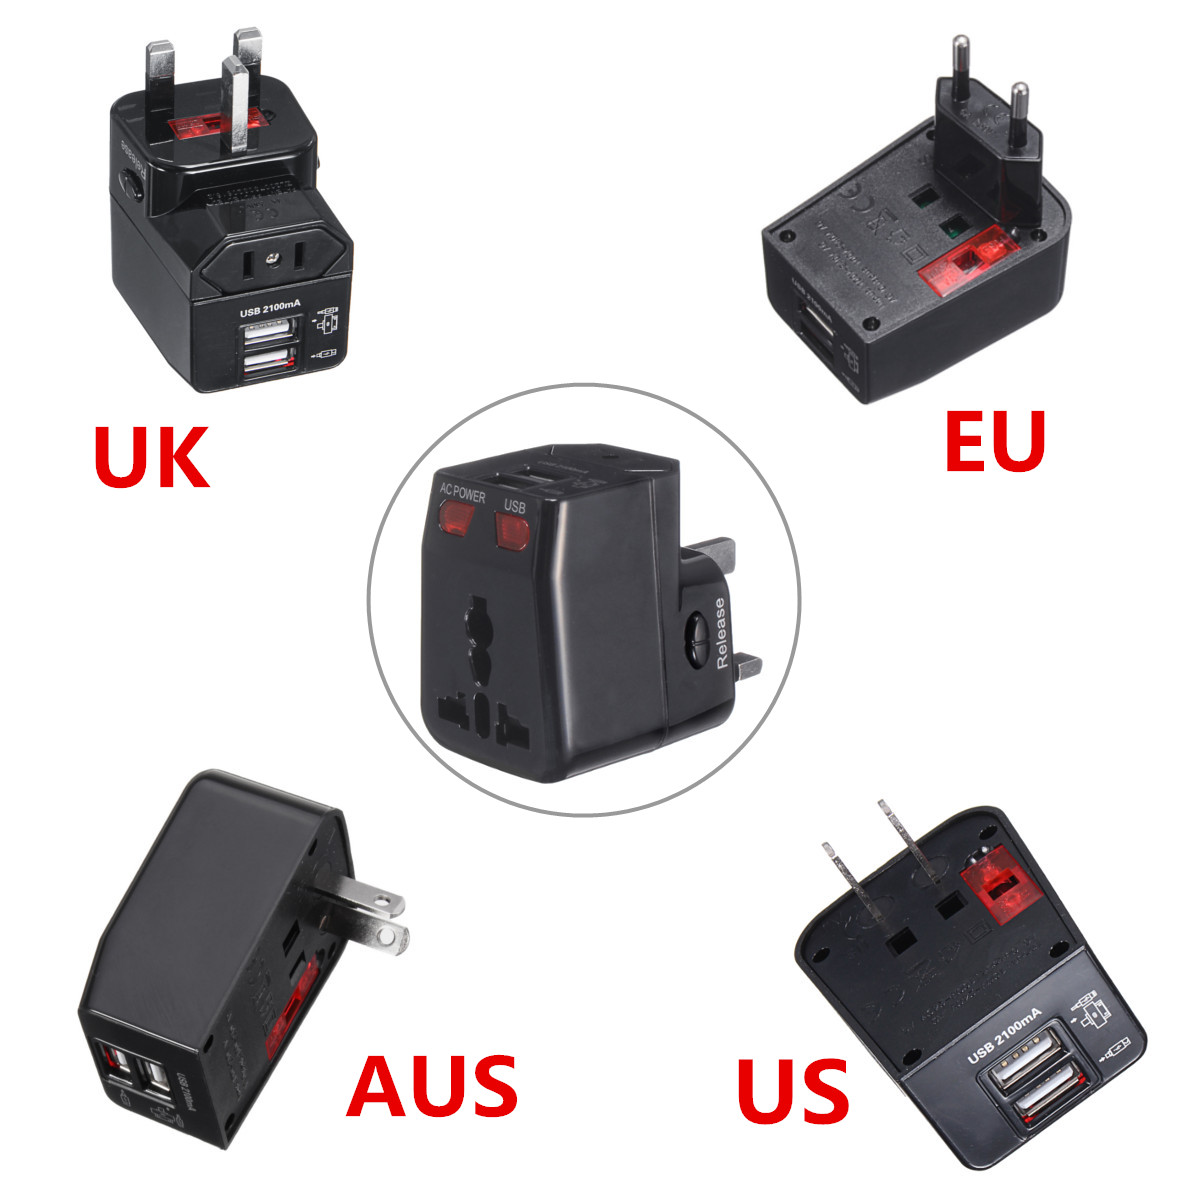 125-250V-USUKAUEU-Universal-World-Travel-Adapter-Plug-Dual-USB-Port-w-Surge-Protector-1286824-2